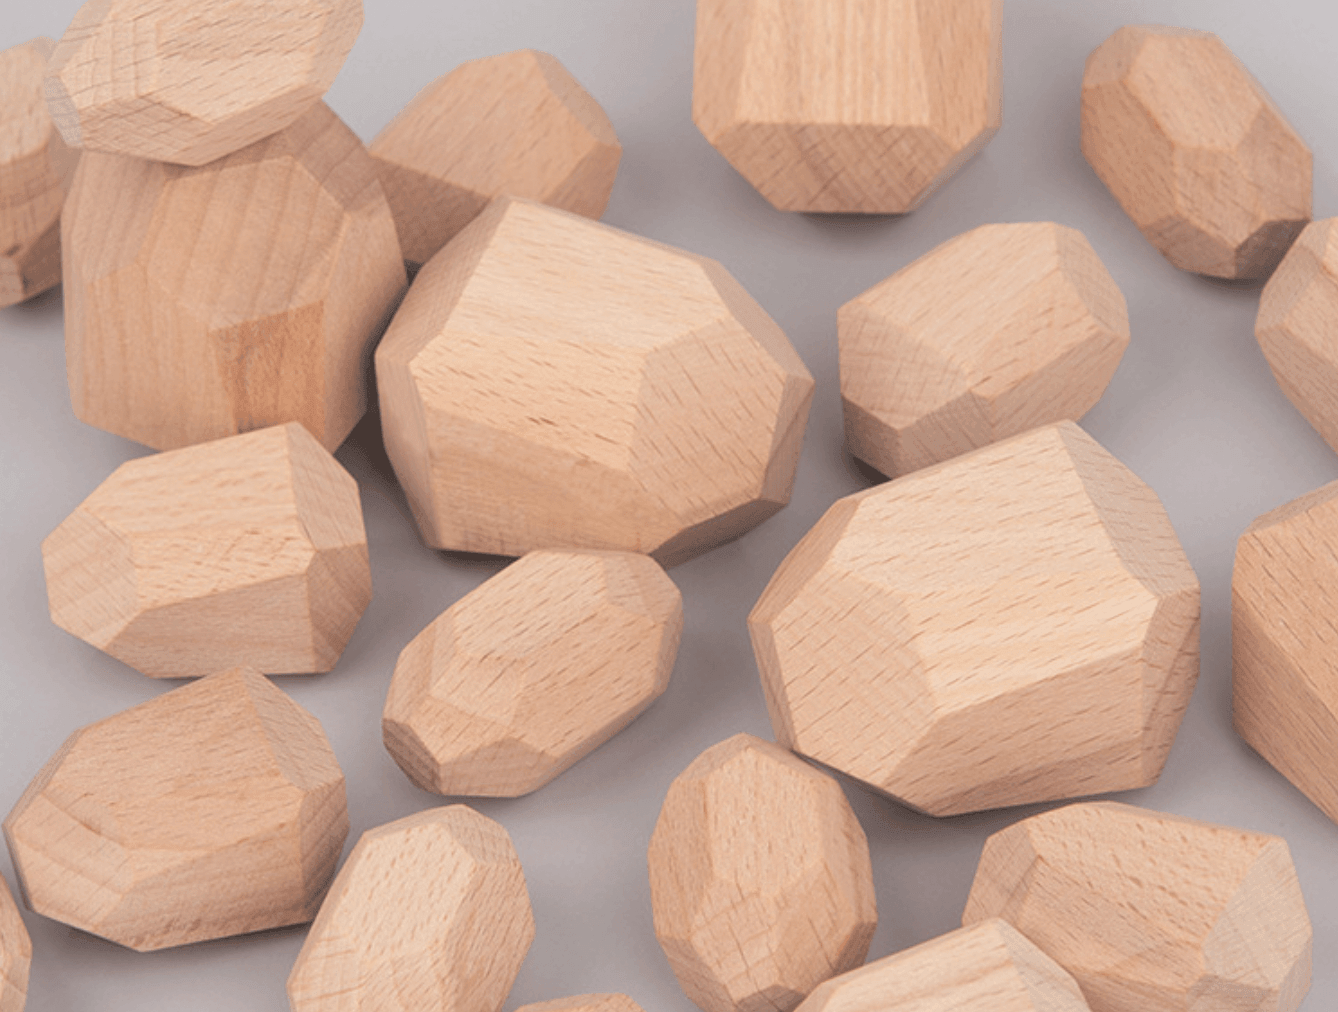 Natural Wooden Stacking Stone Building Blocks Educational Toys (10pcs) - Taylorson